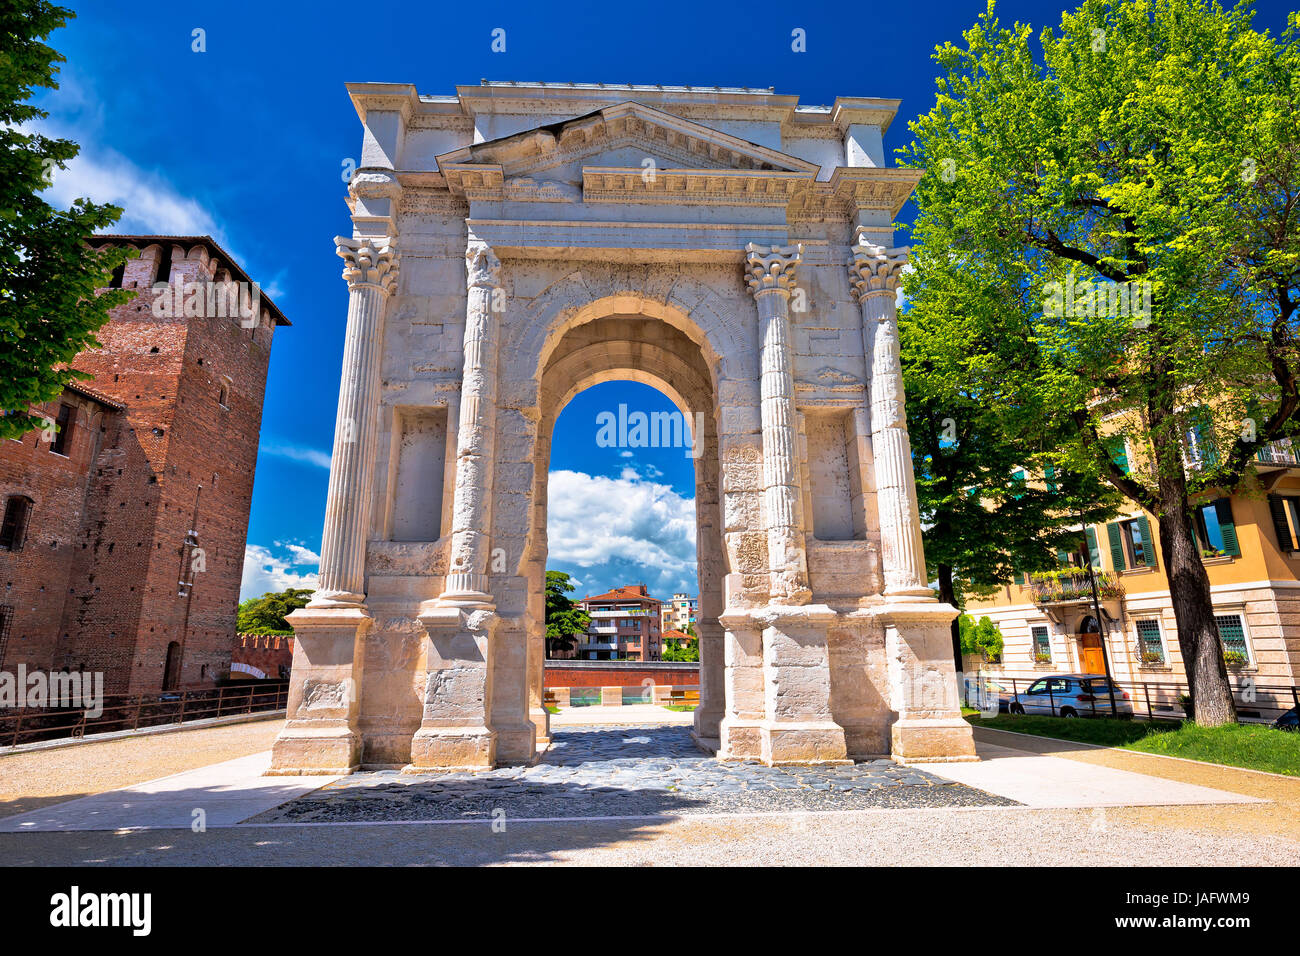 Arco dei Gavi famous historic landmark in Verona on Adige river view, tourist destination in Veneto region of Italy Stock Photo